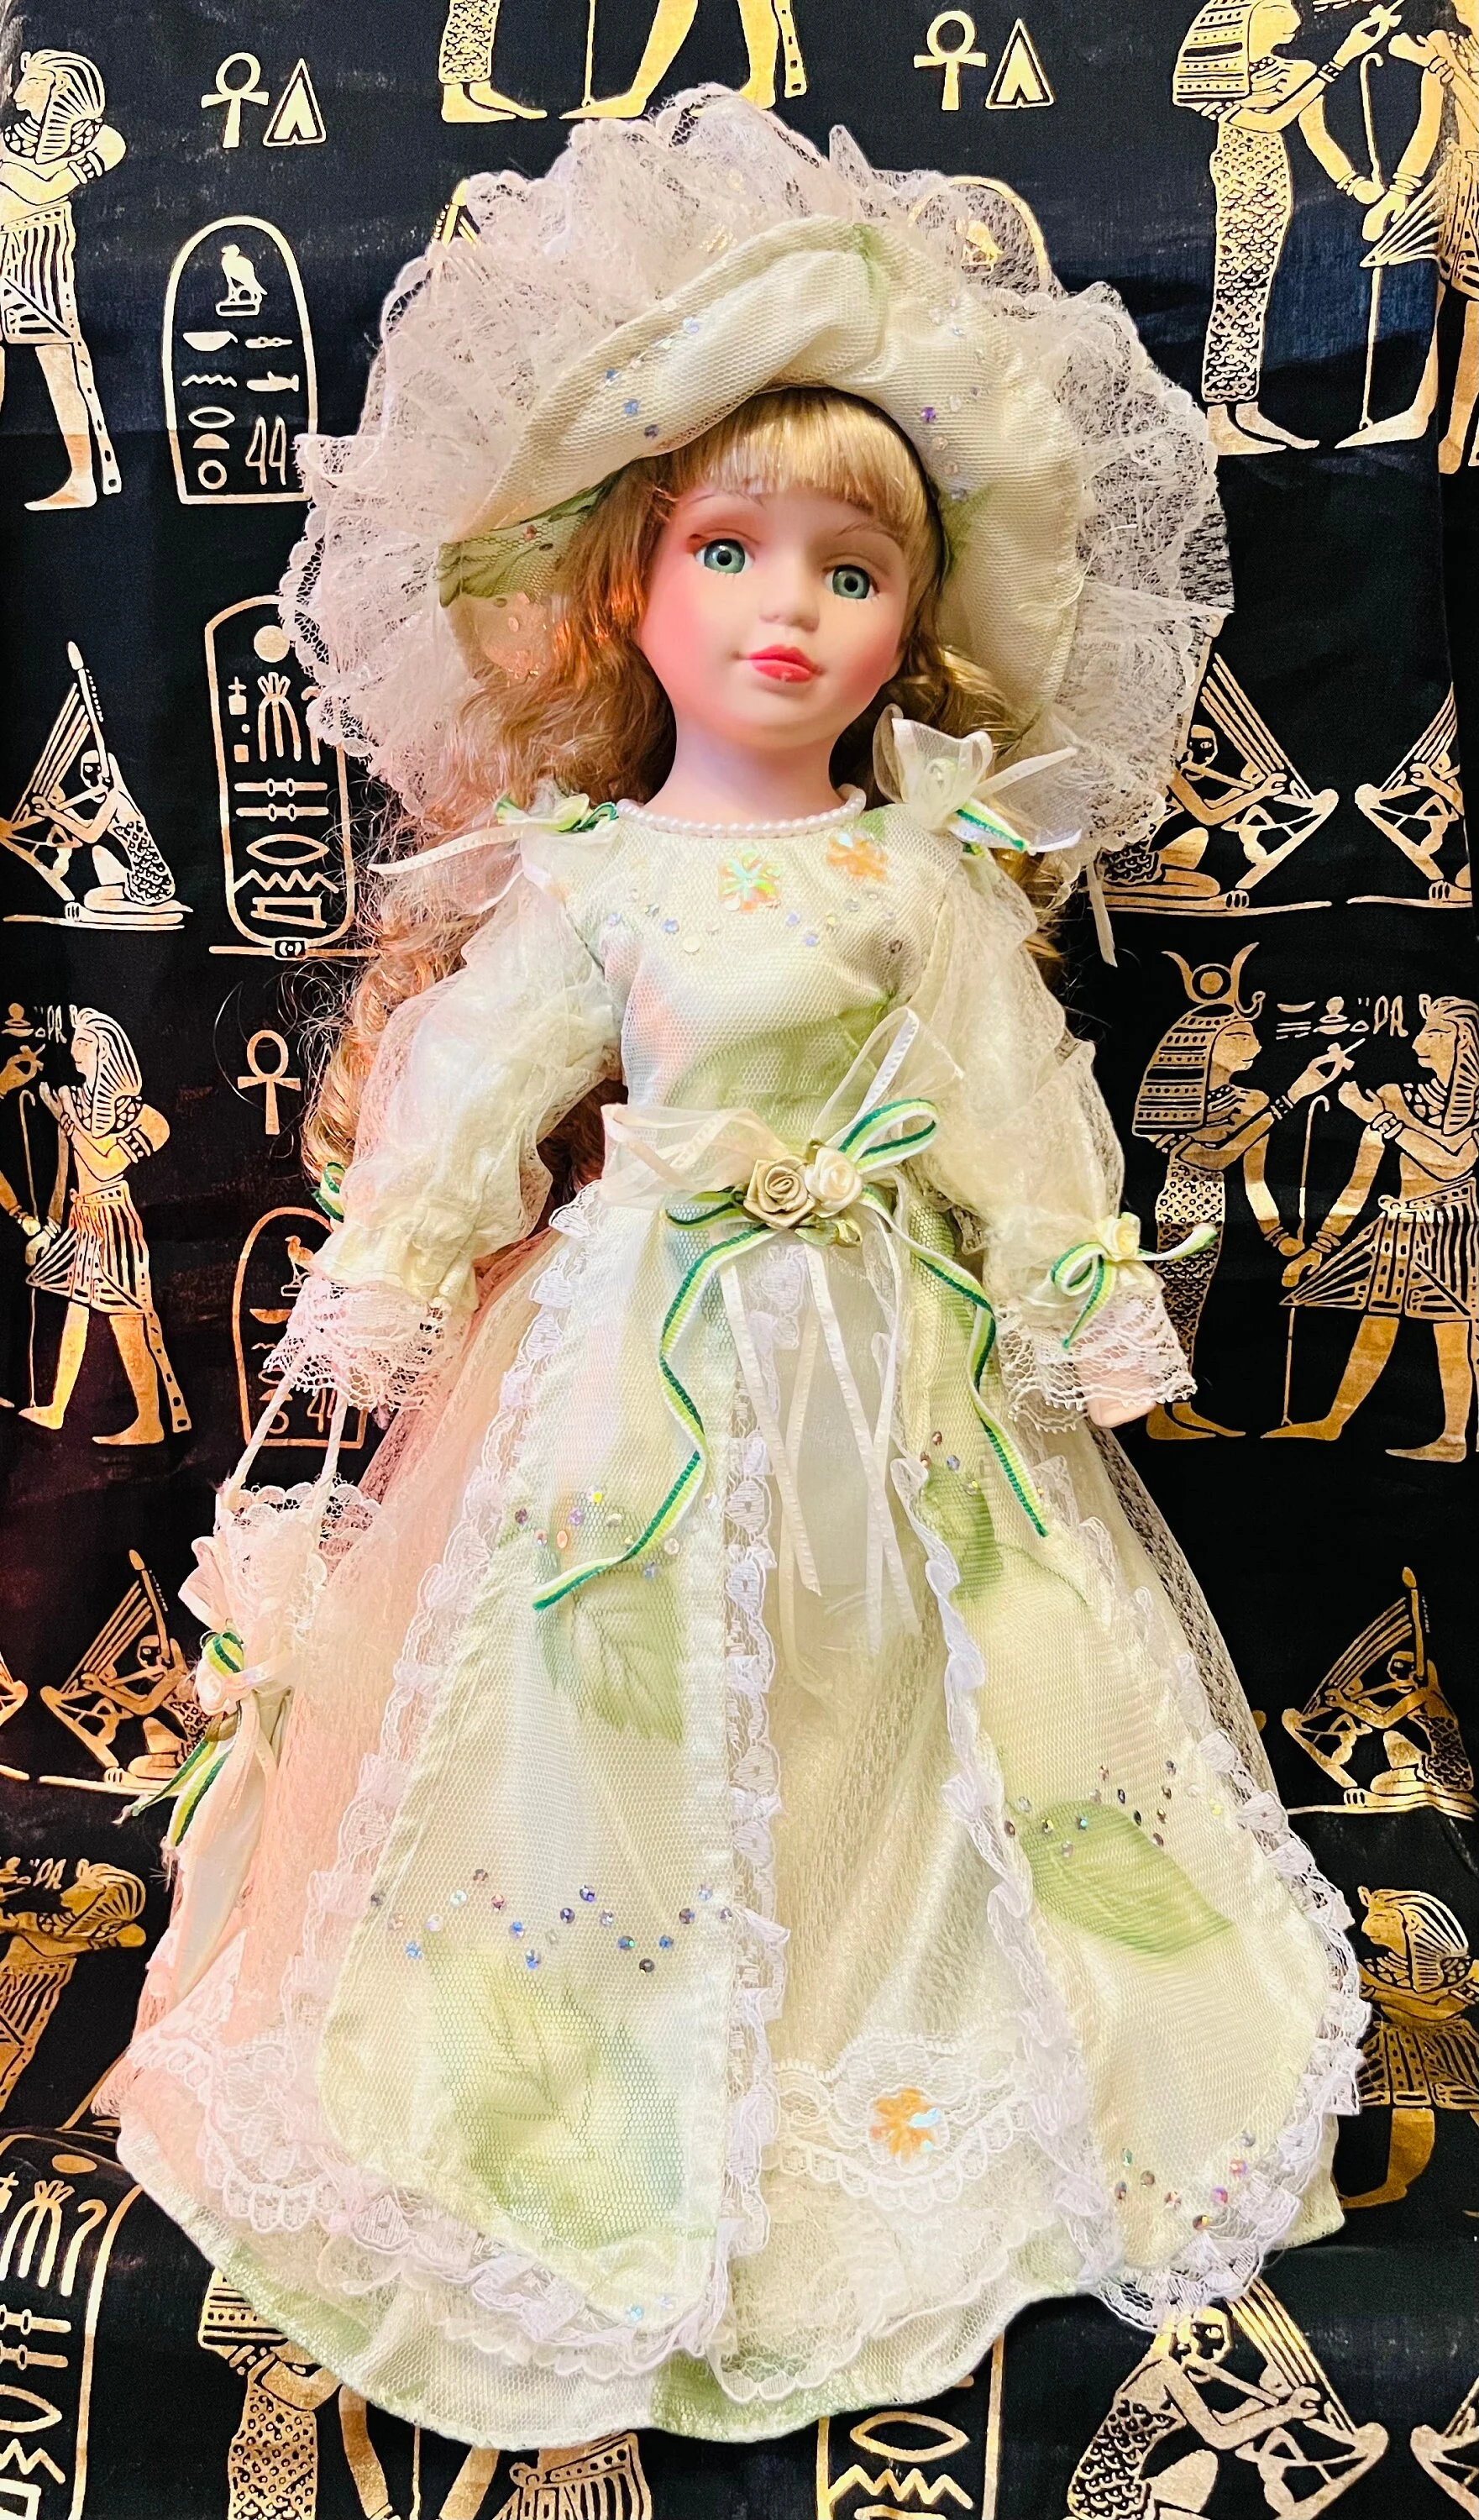 Haunted Vintage Porcelain Doll - Jötunheimr giantess  - $537.12